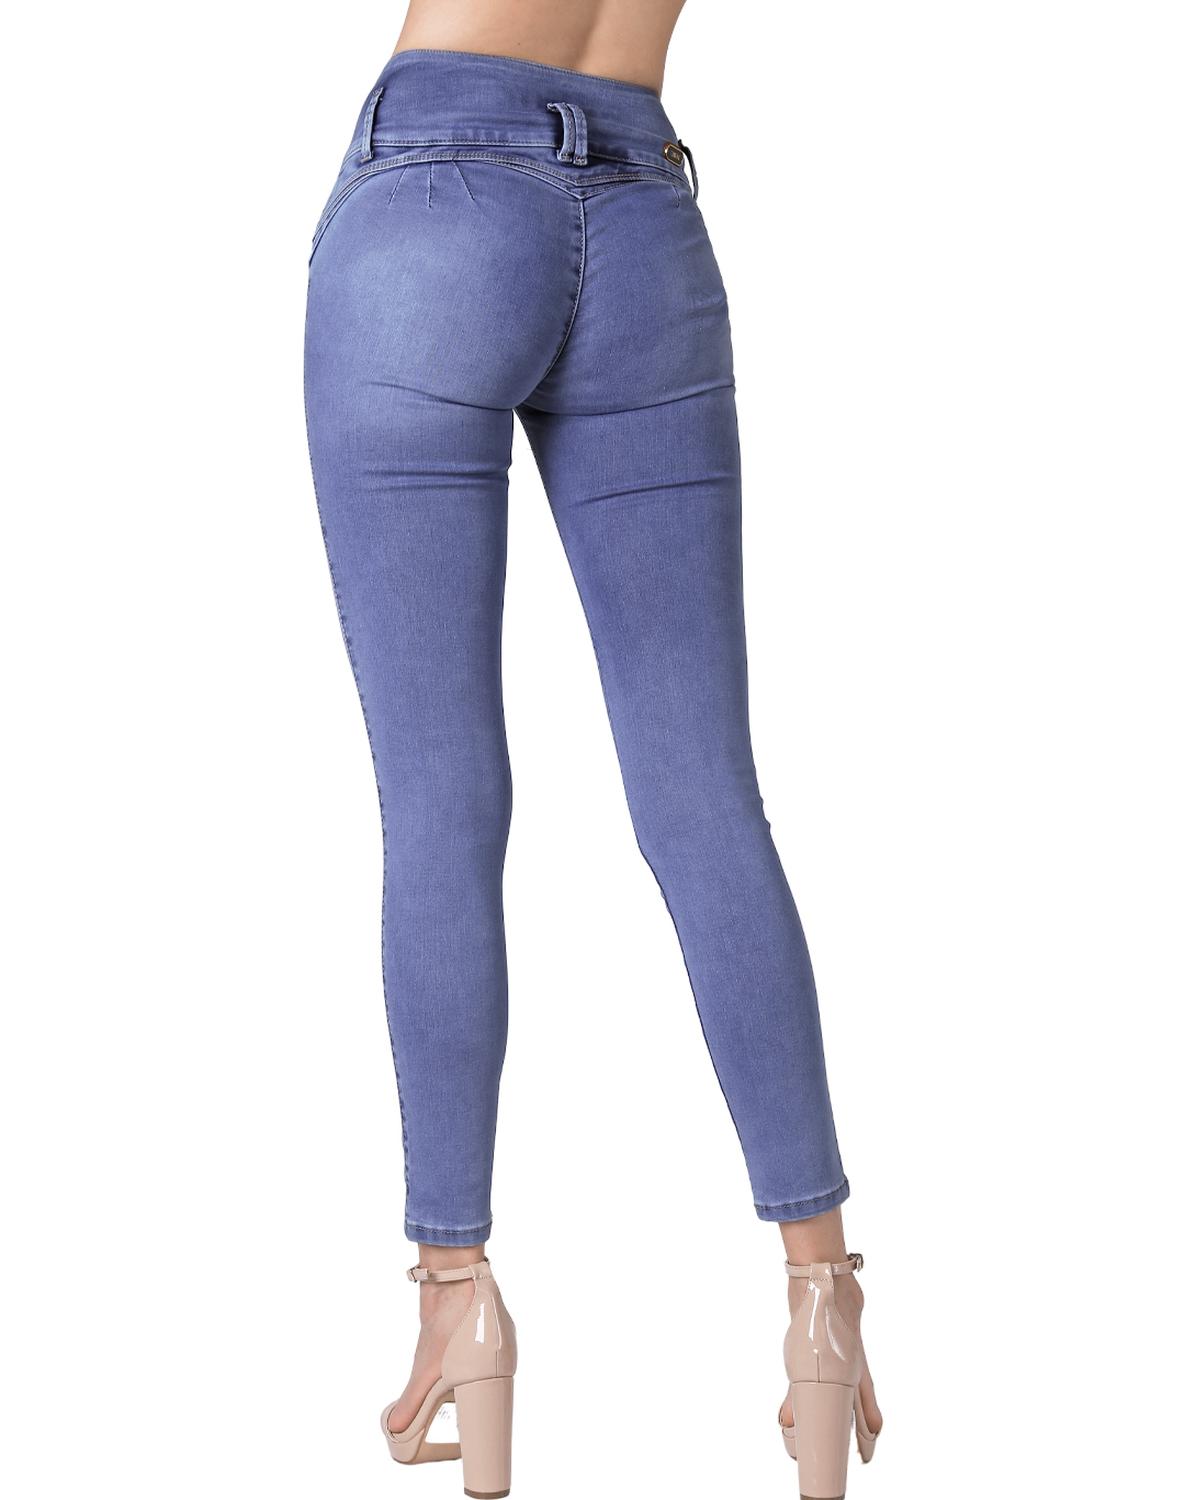 Jeans Moda Skinny Mujer Azul Fergino 52904611